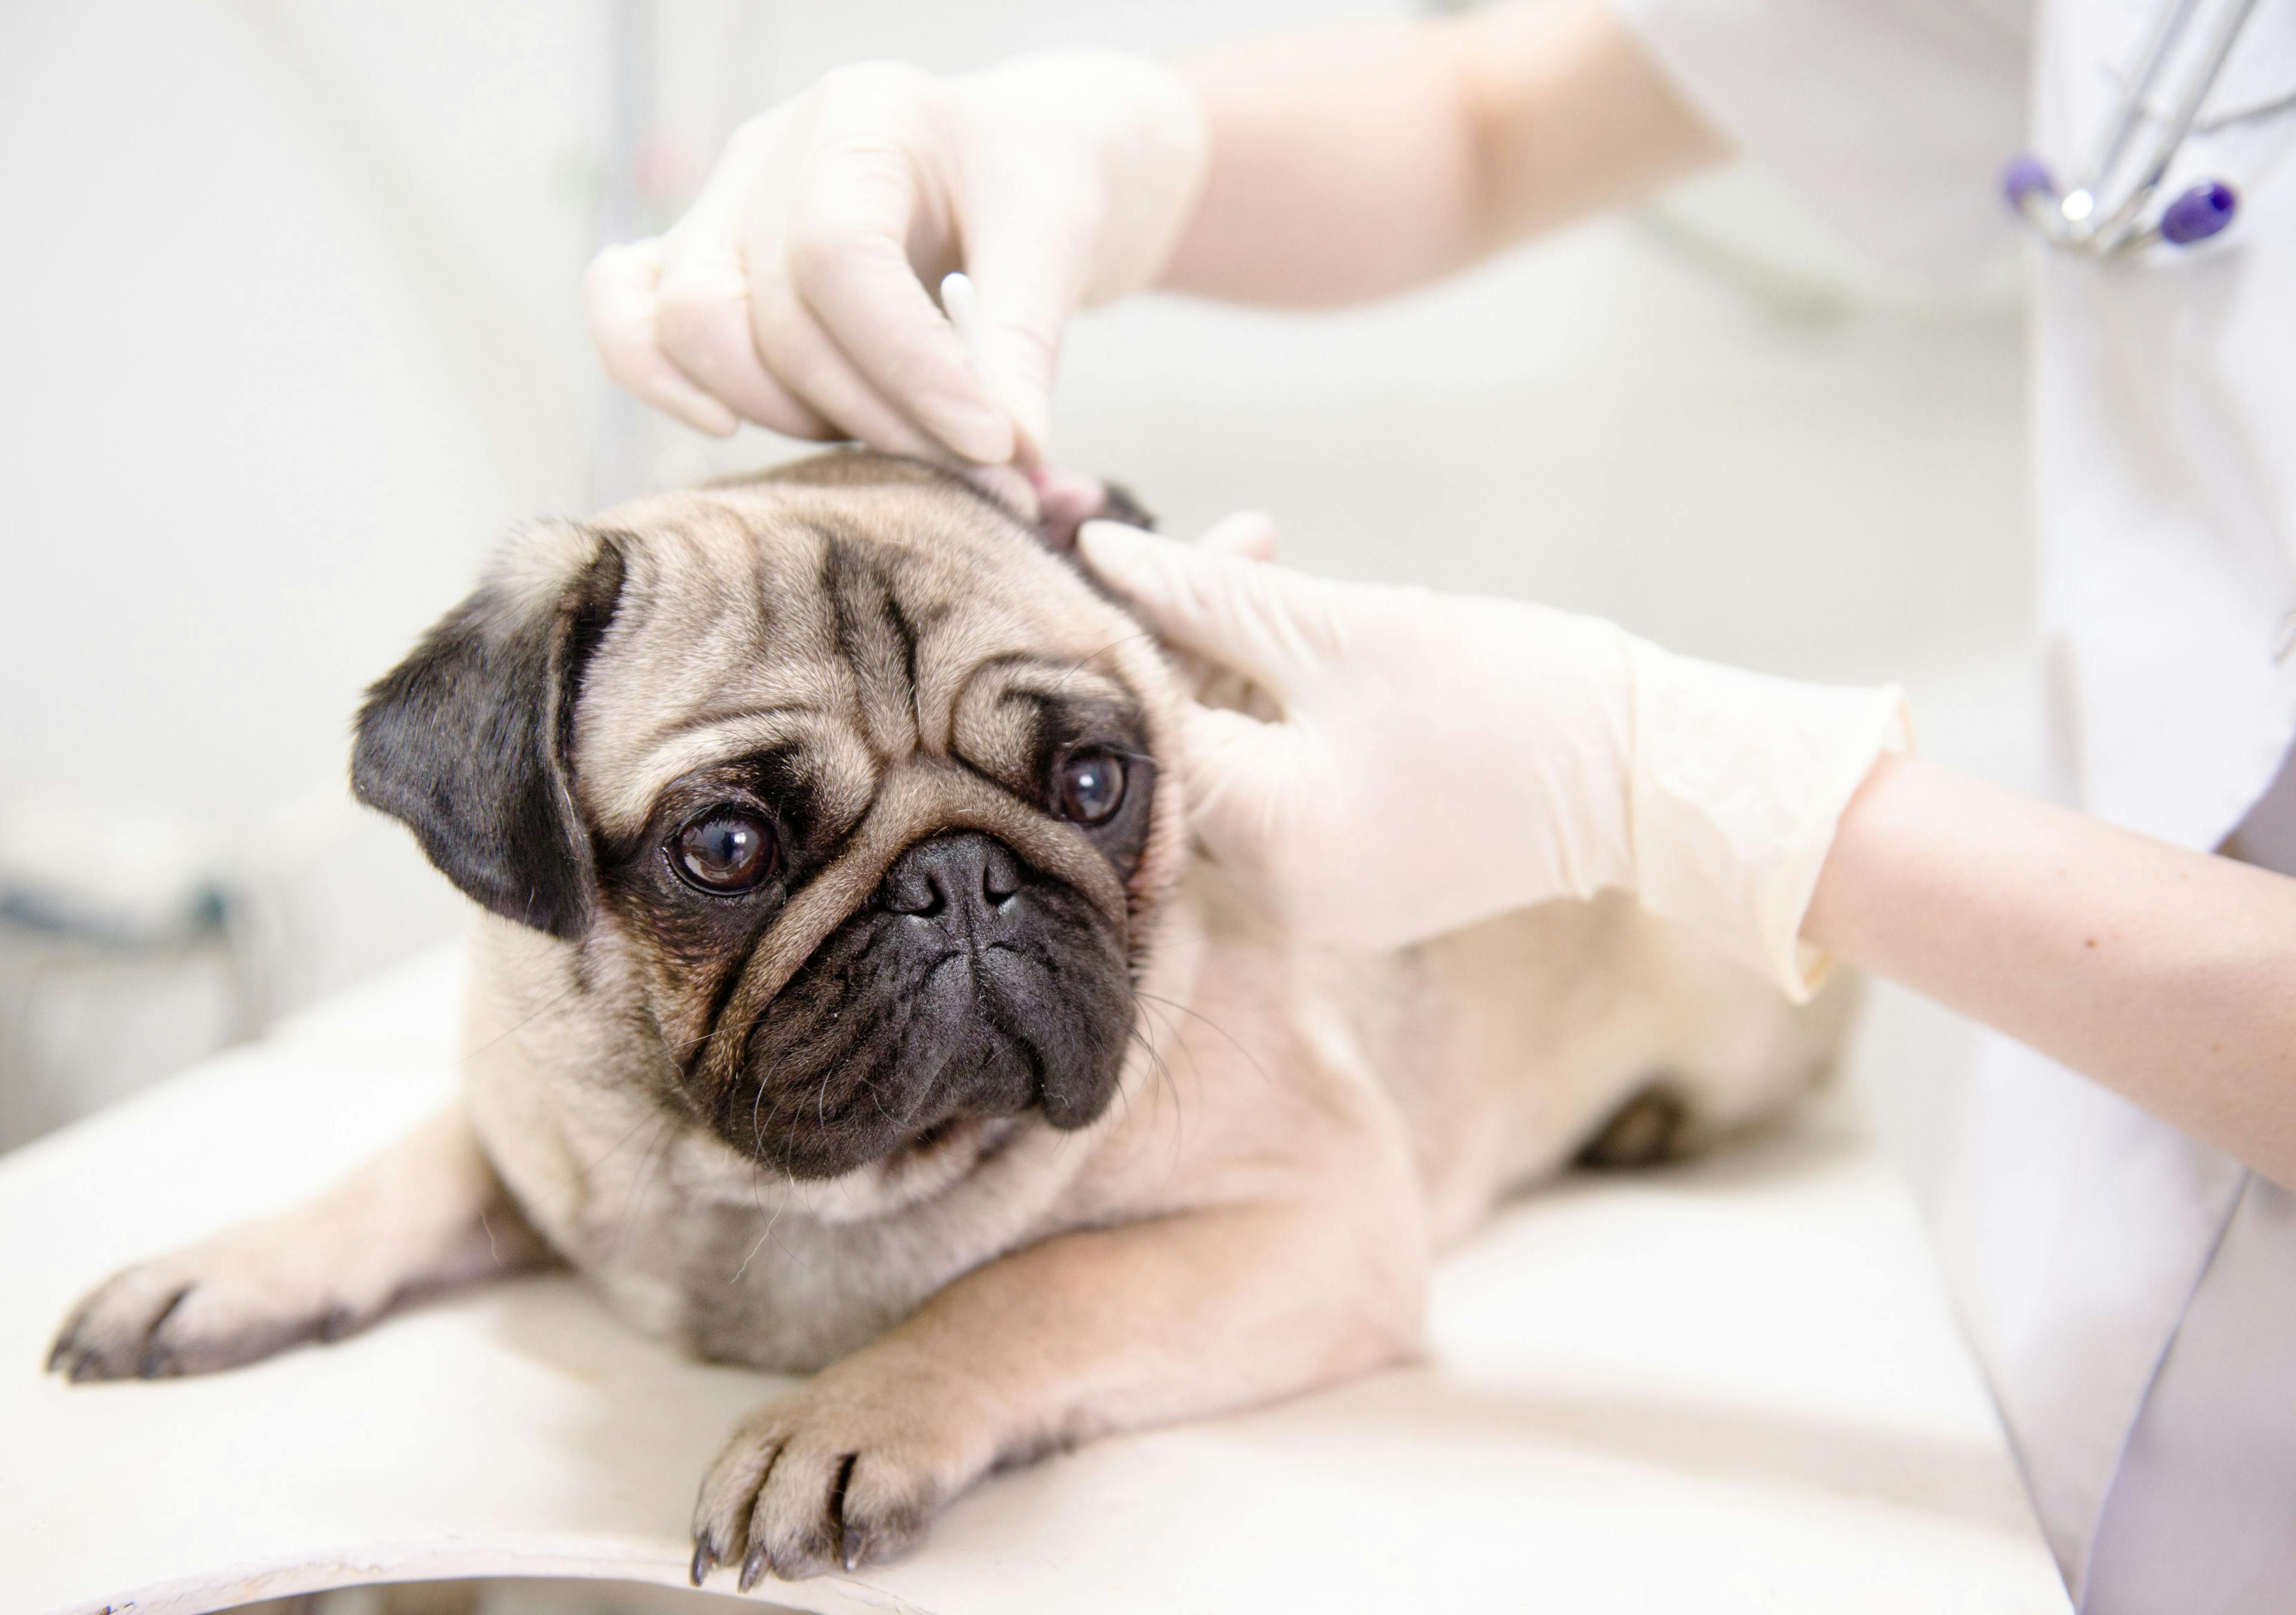 Better medicine, better business: The hospitalized pet